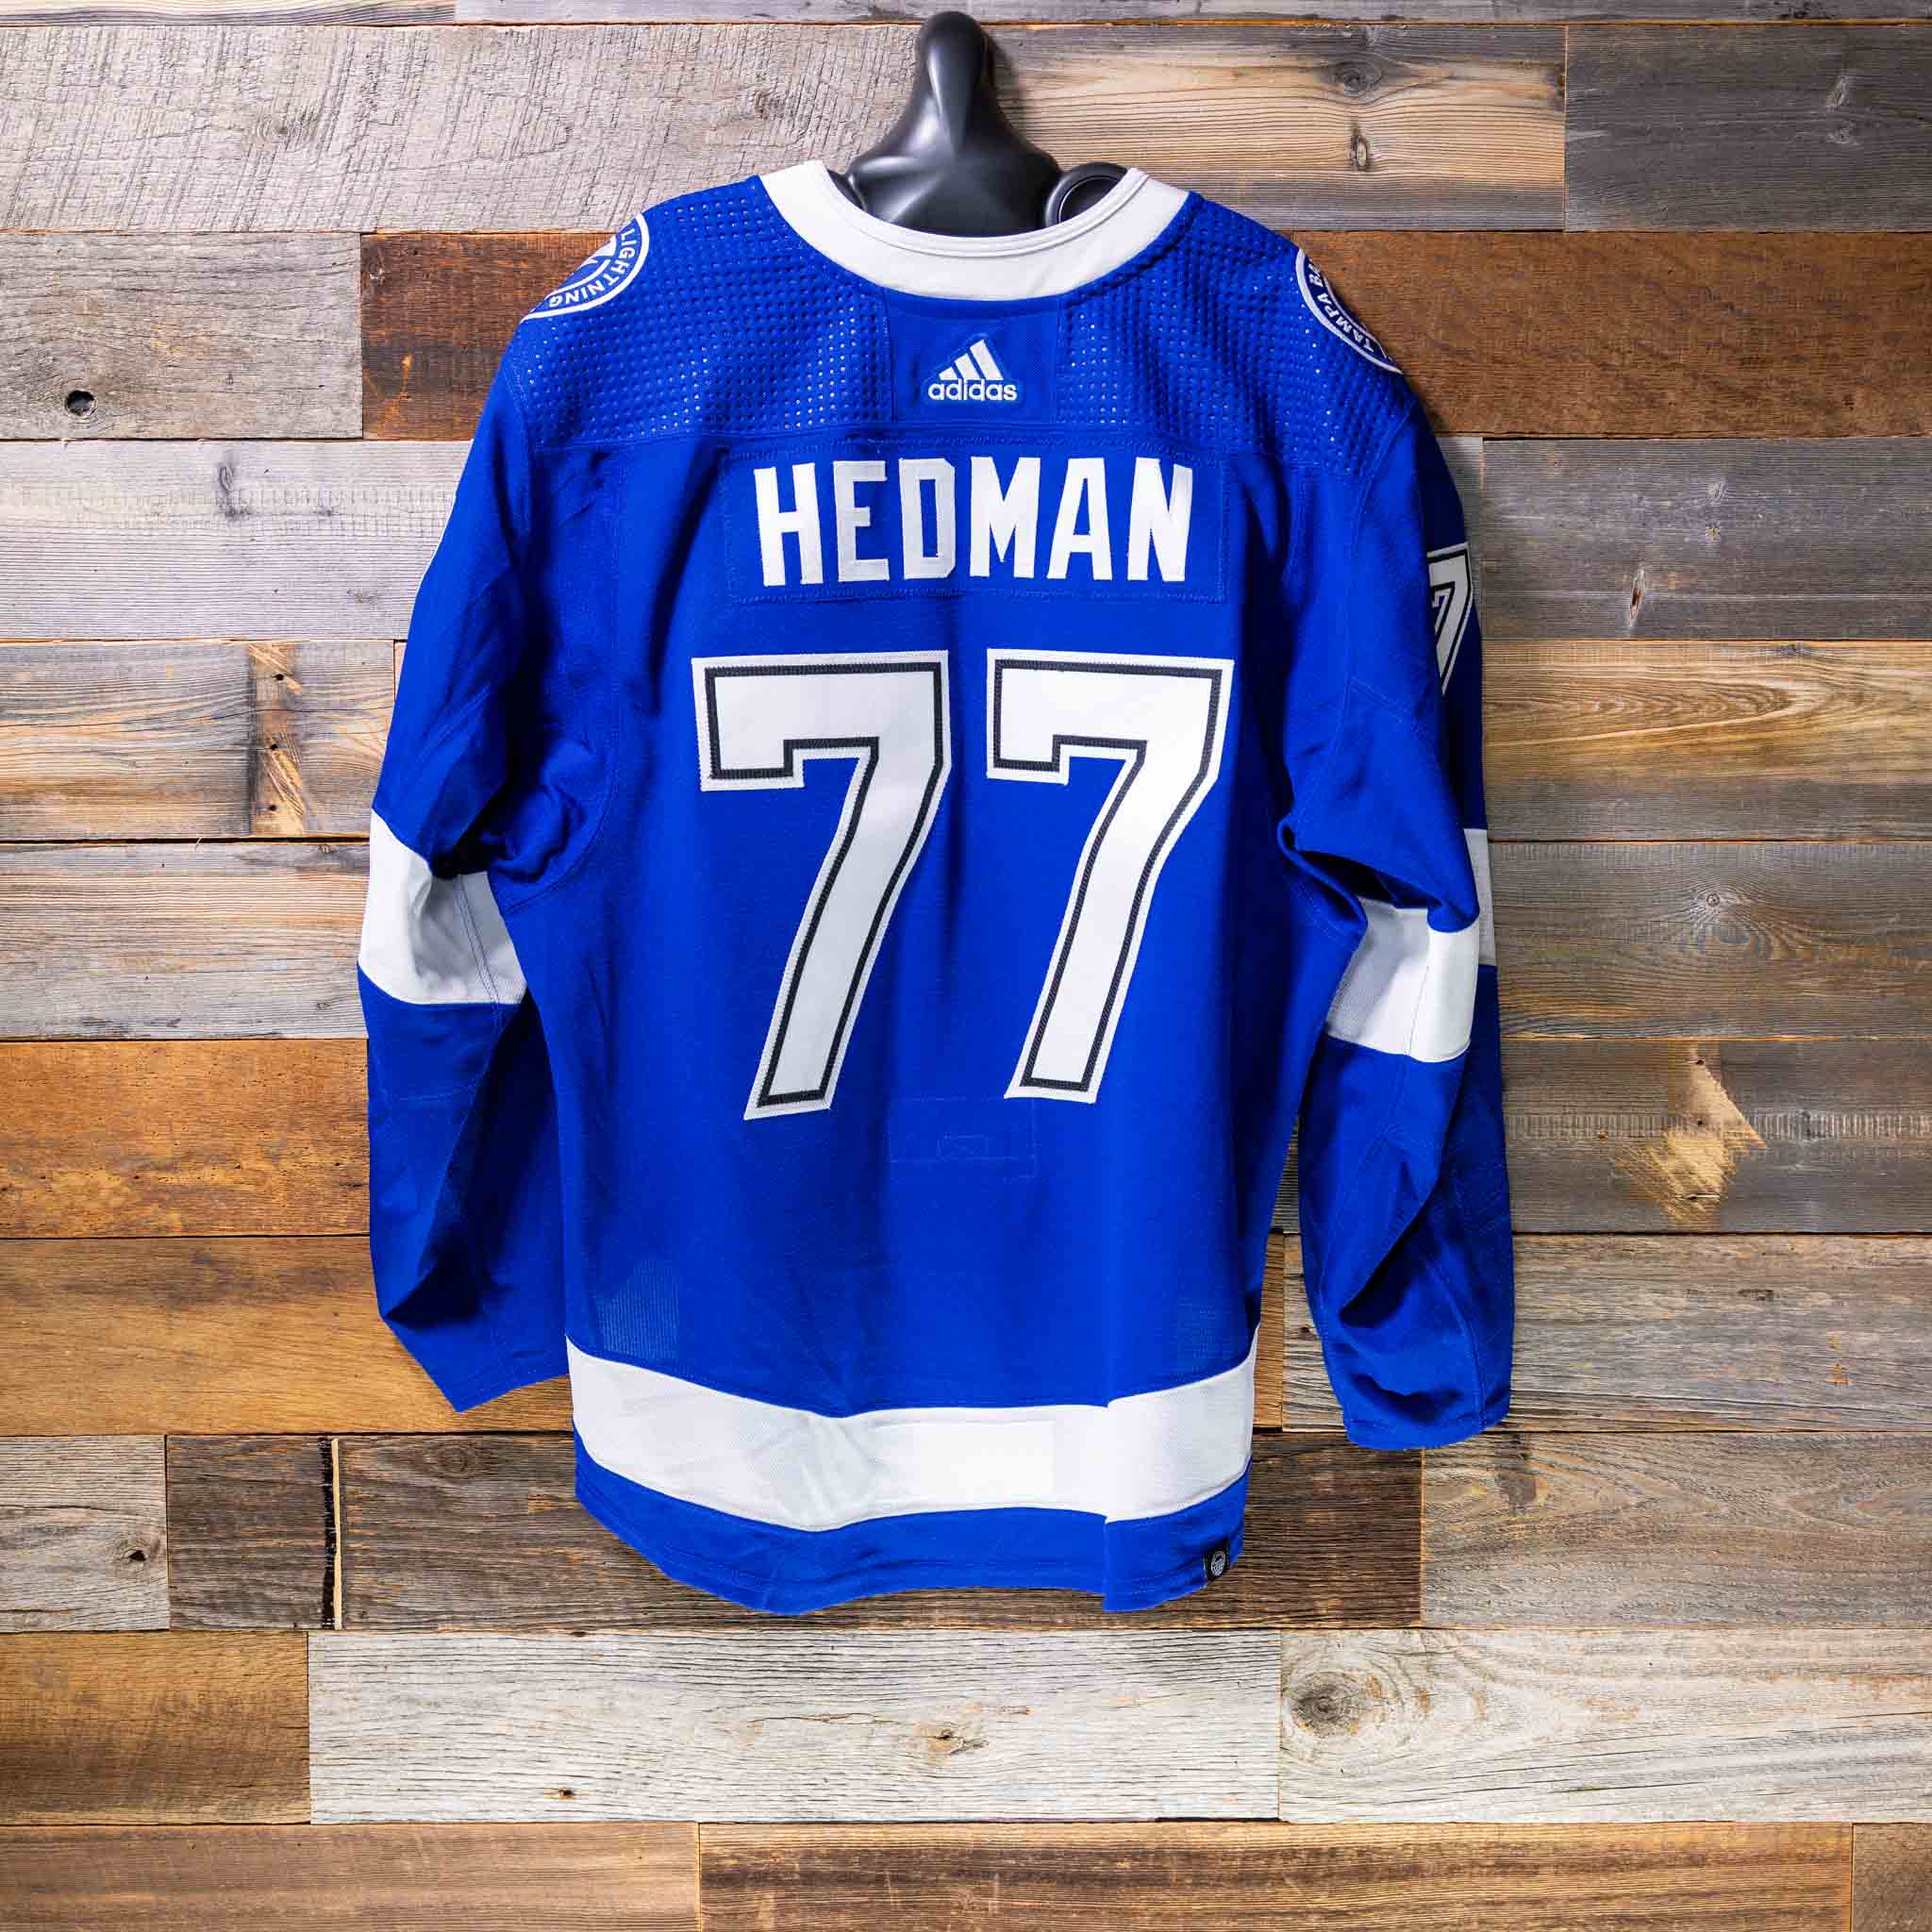 Adidas #77 Hedman (A) 2021-22 Game-Worn Lightning Home Jersey (Size 60) Set 3